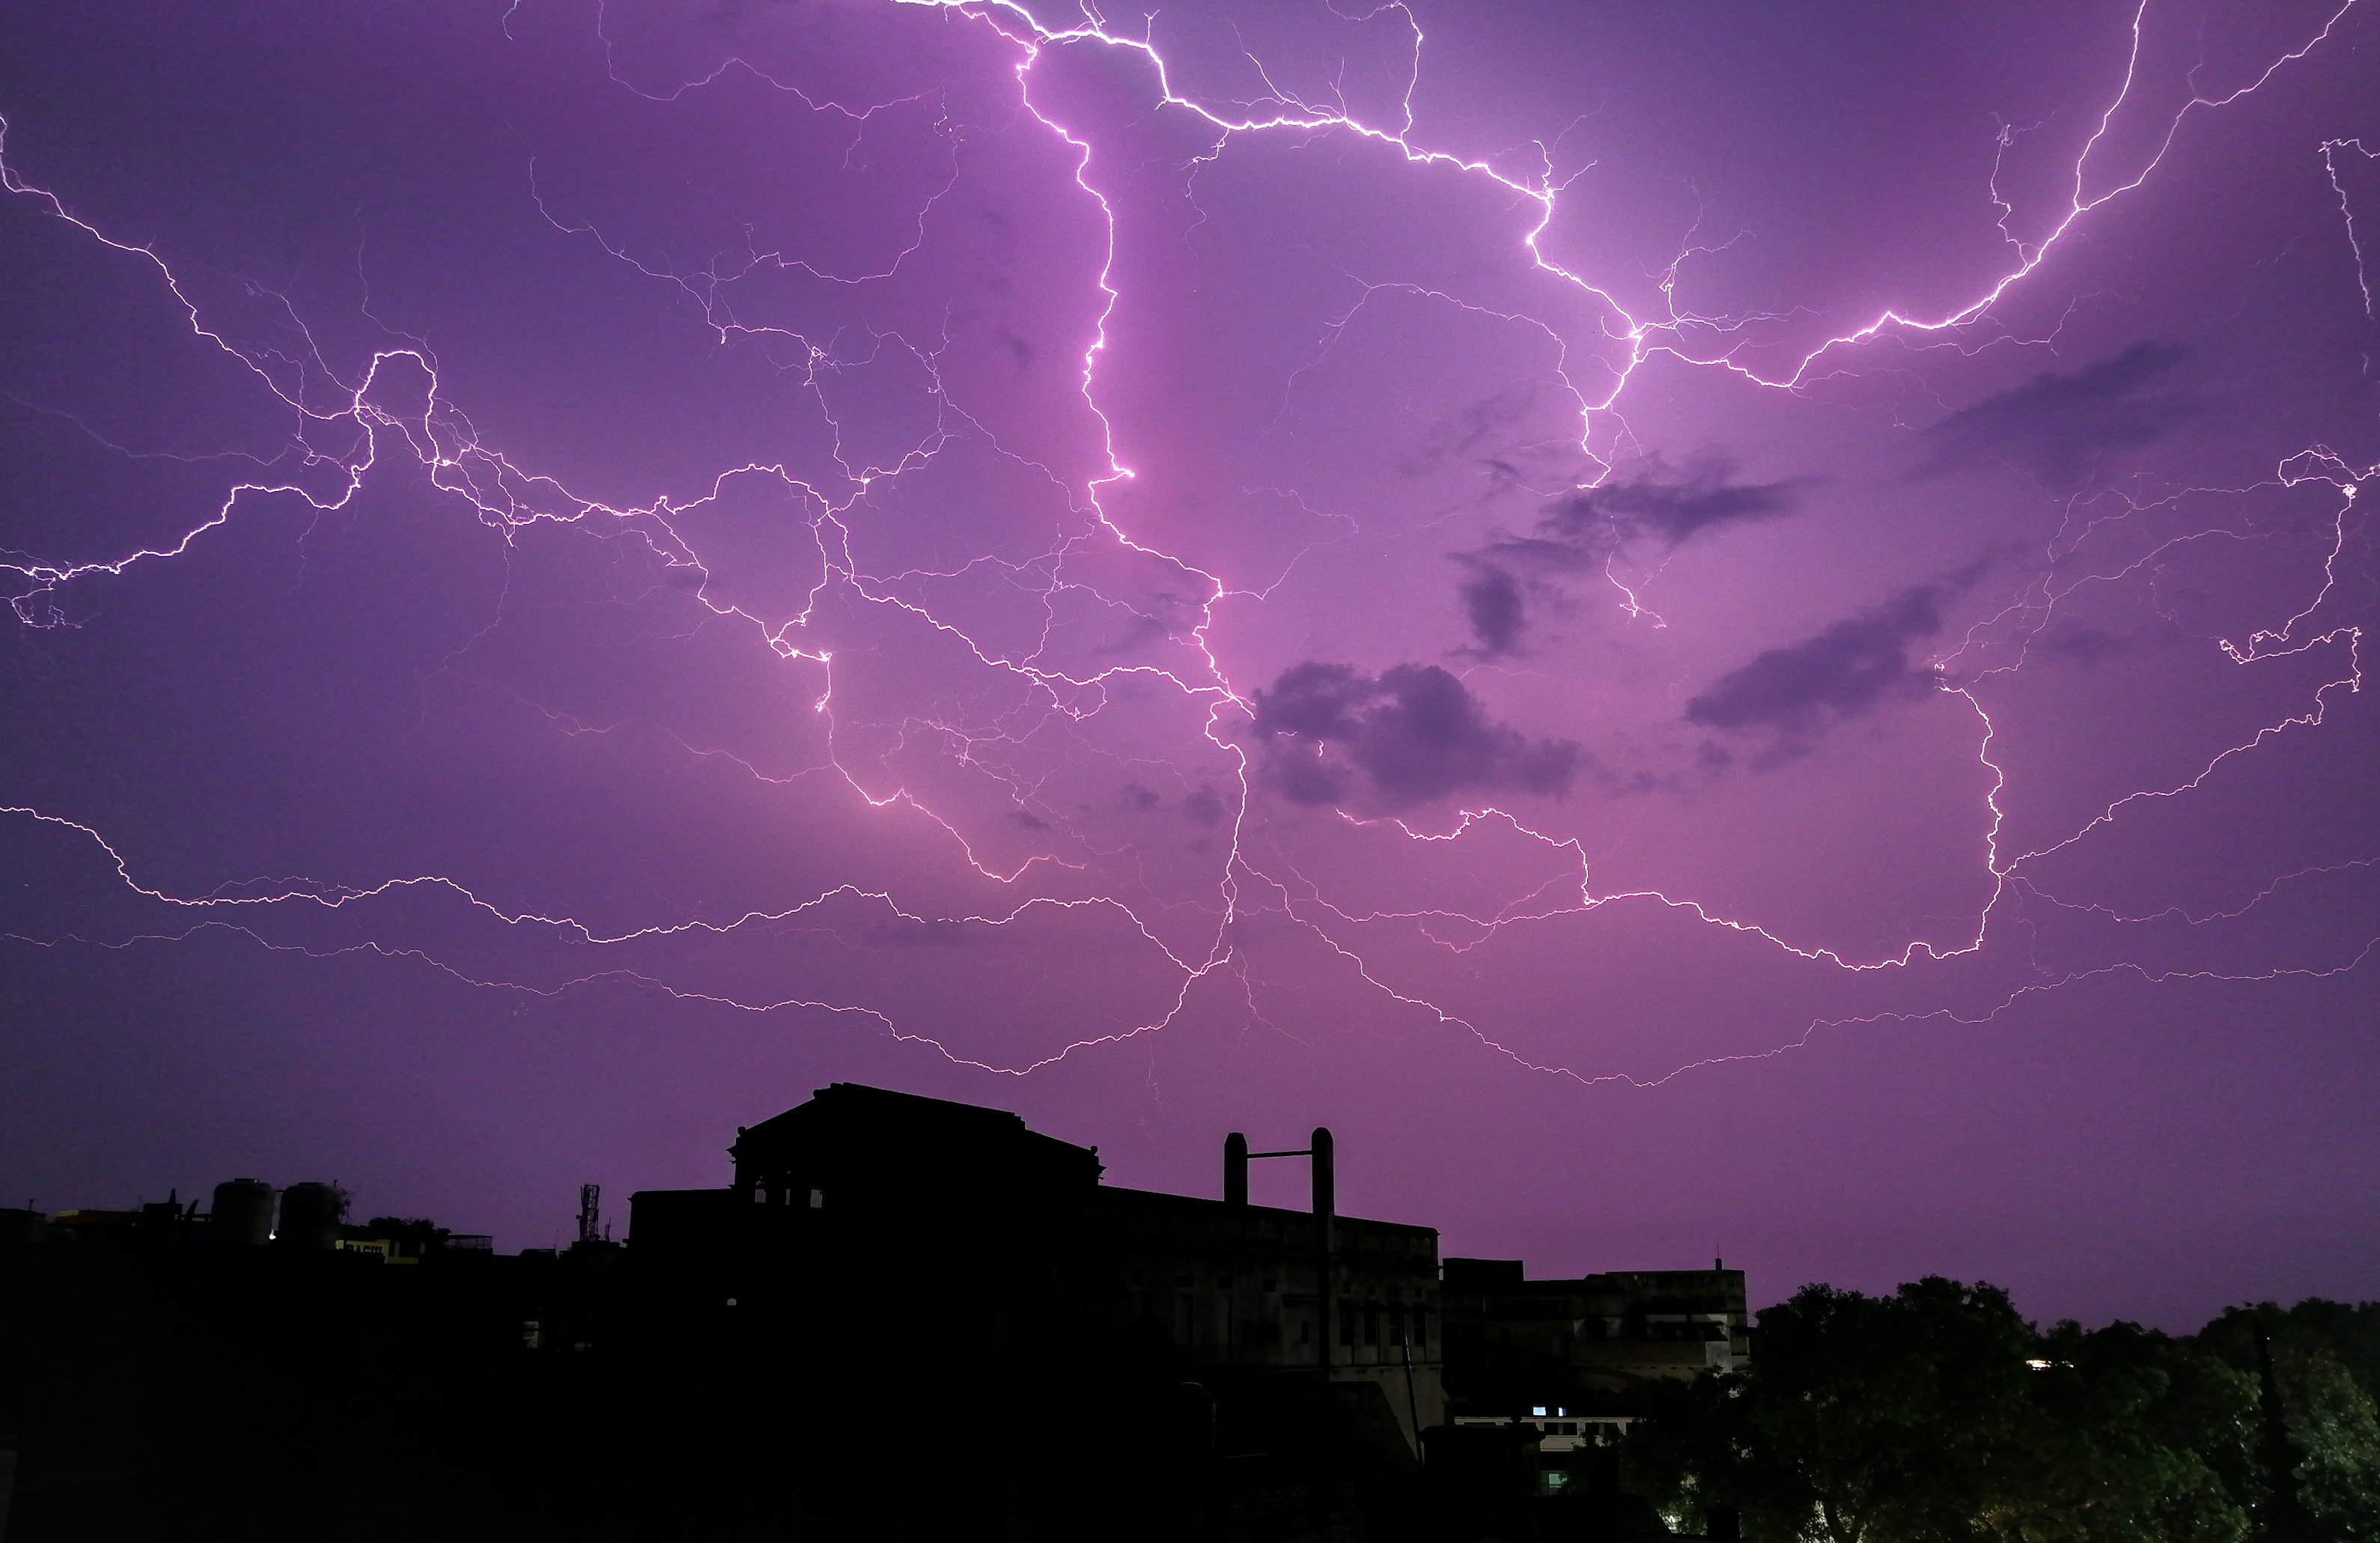 #Sky #lights #manson #thunder #noperson #varanasi #kashi #banaras #dhirajgoswami #धीरजगोस्वामी, DHIRAJ GOSWAMI